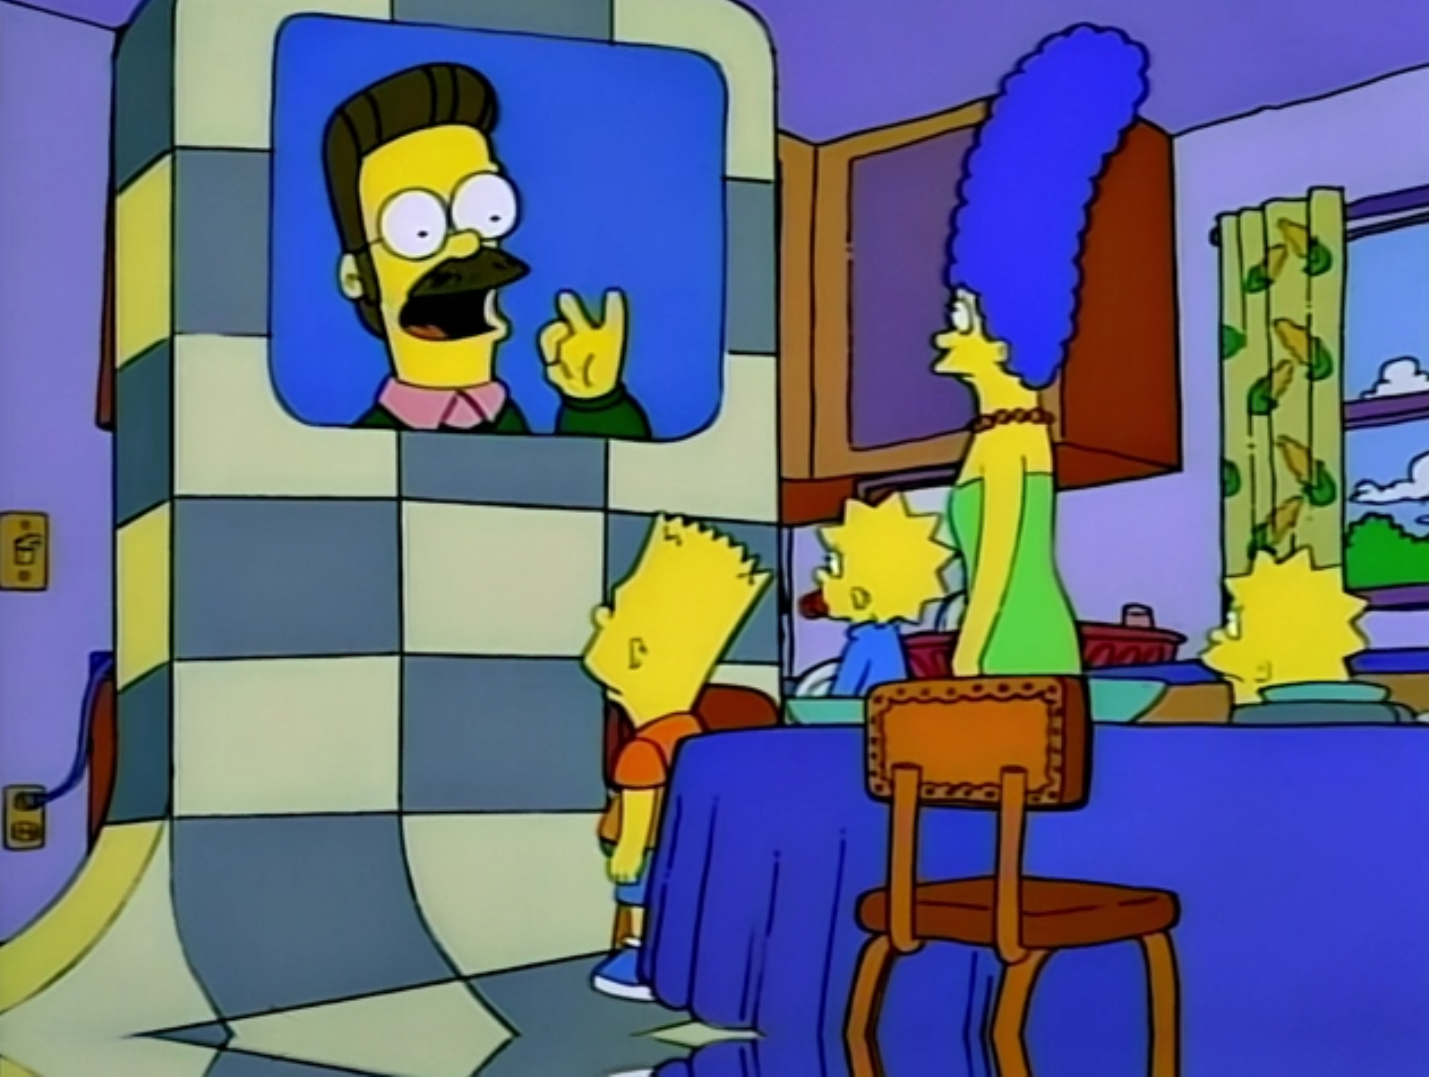 Джерри и мардже играют по крупному. Барт симпсон домик ужасов. Нед фландерс и мардж симпсон. Симпсоны телевизор. Симпсоны дом ужасов 6.